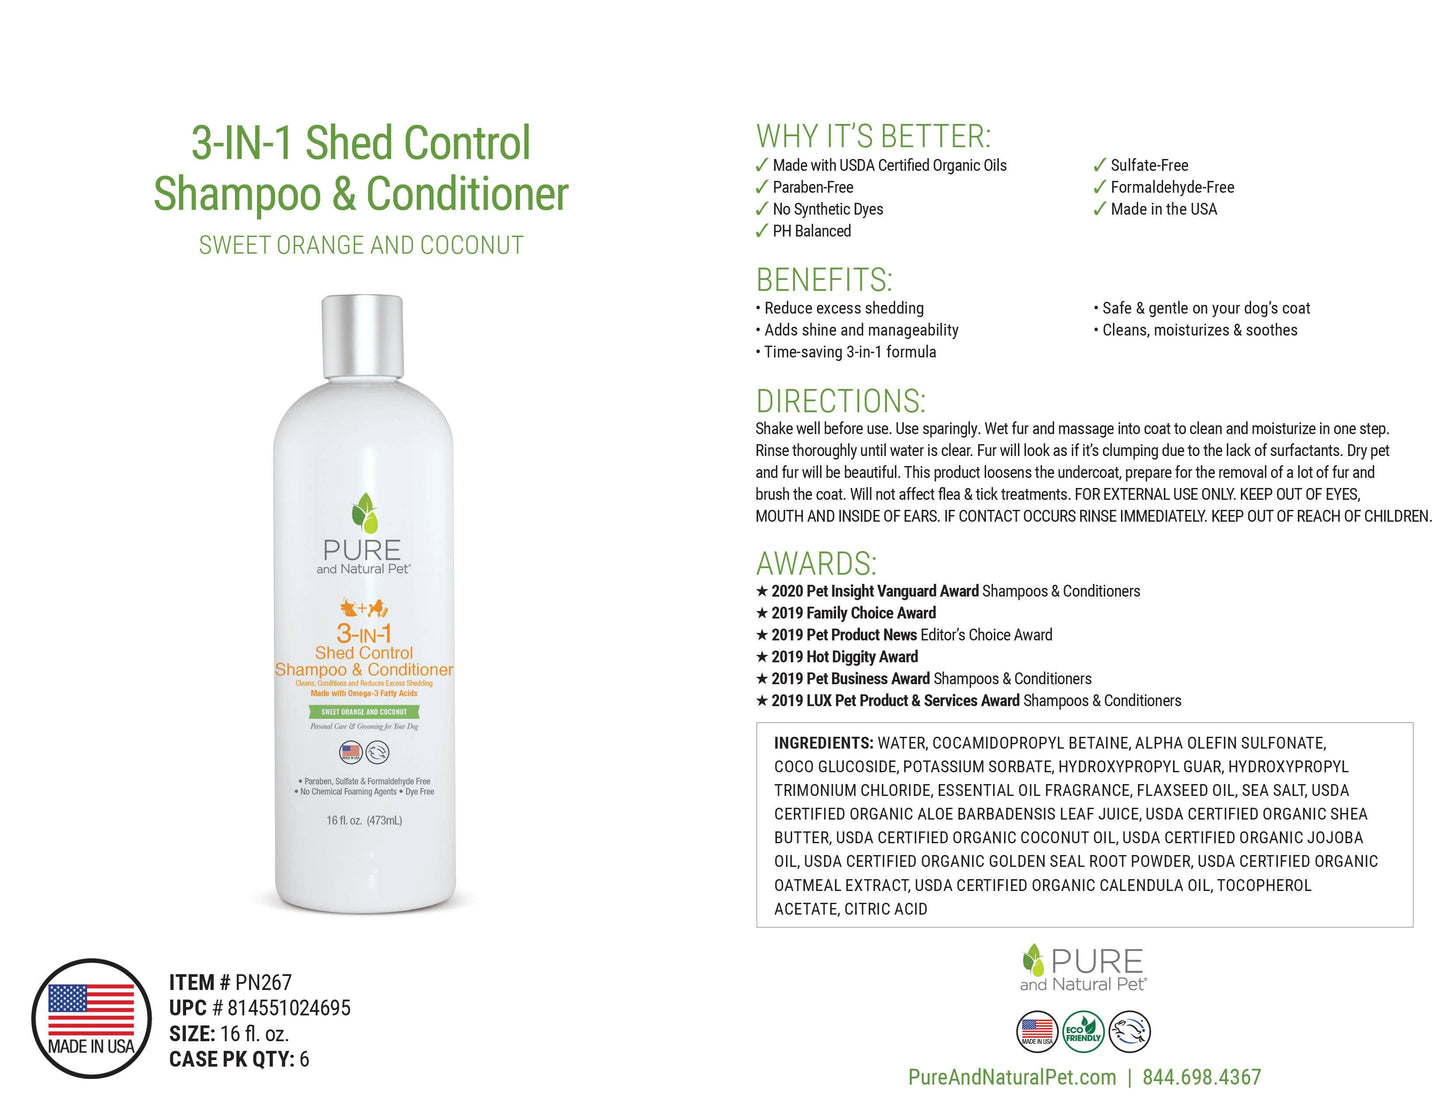 3-in-1 Shed Control Shampoo & Conditioner (Orange & Coconut)